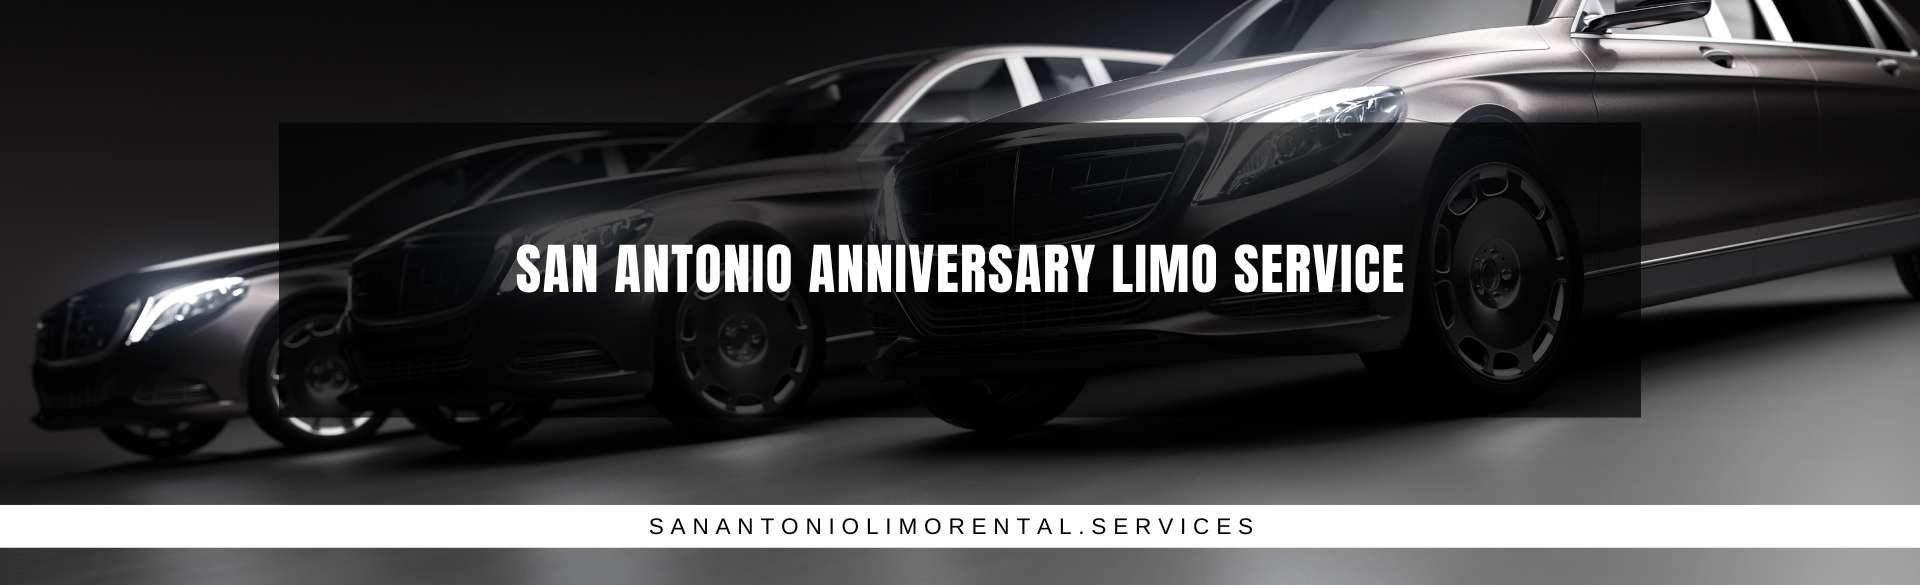 San Antonio Anniversary Limo Service